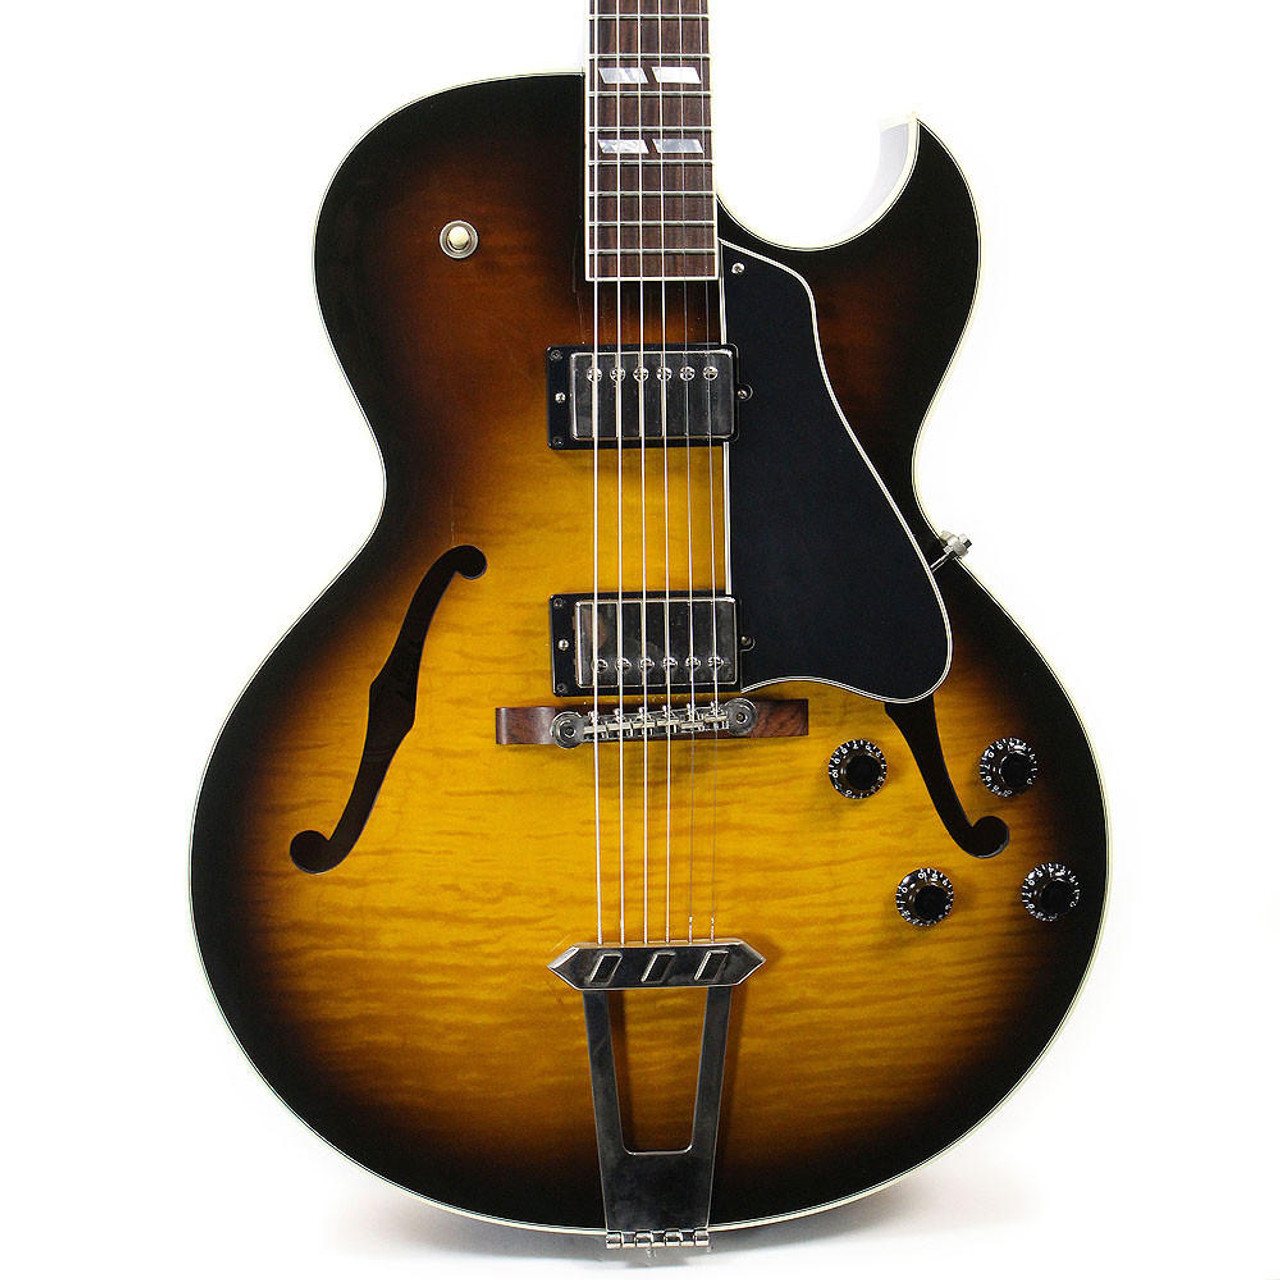 2002 Gibson ES-175 Electric Guitar Sunburst Finish